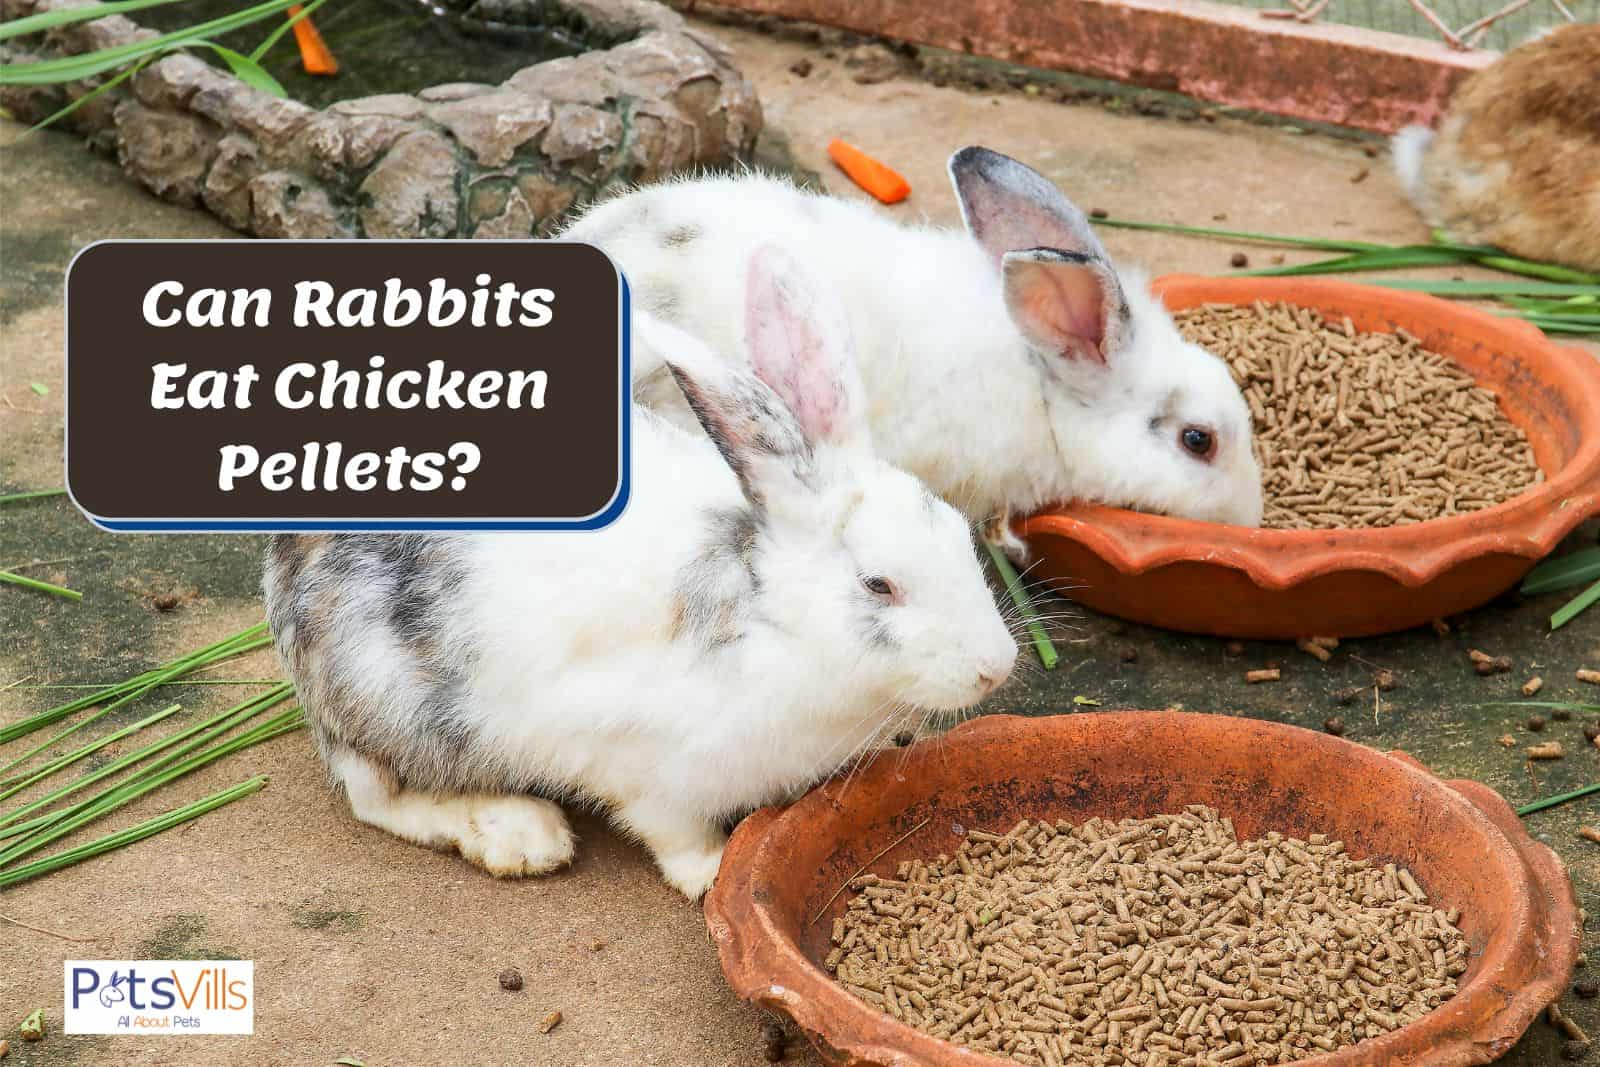 rabbits eating pellets but can rabbits eat chicken pellets